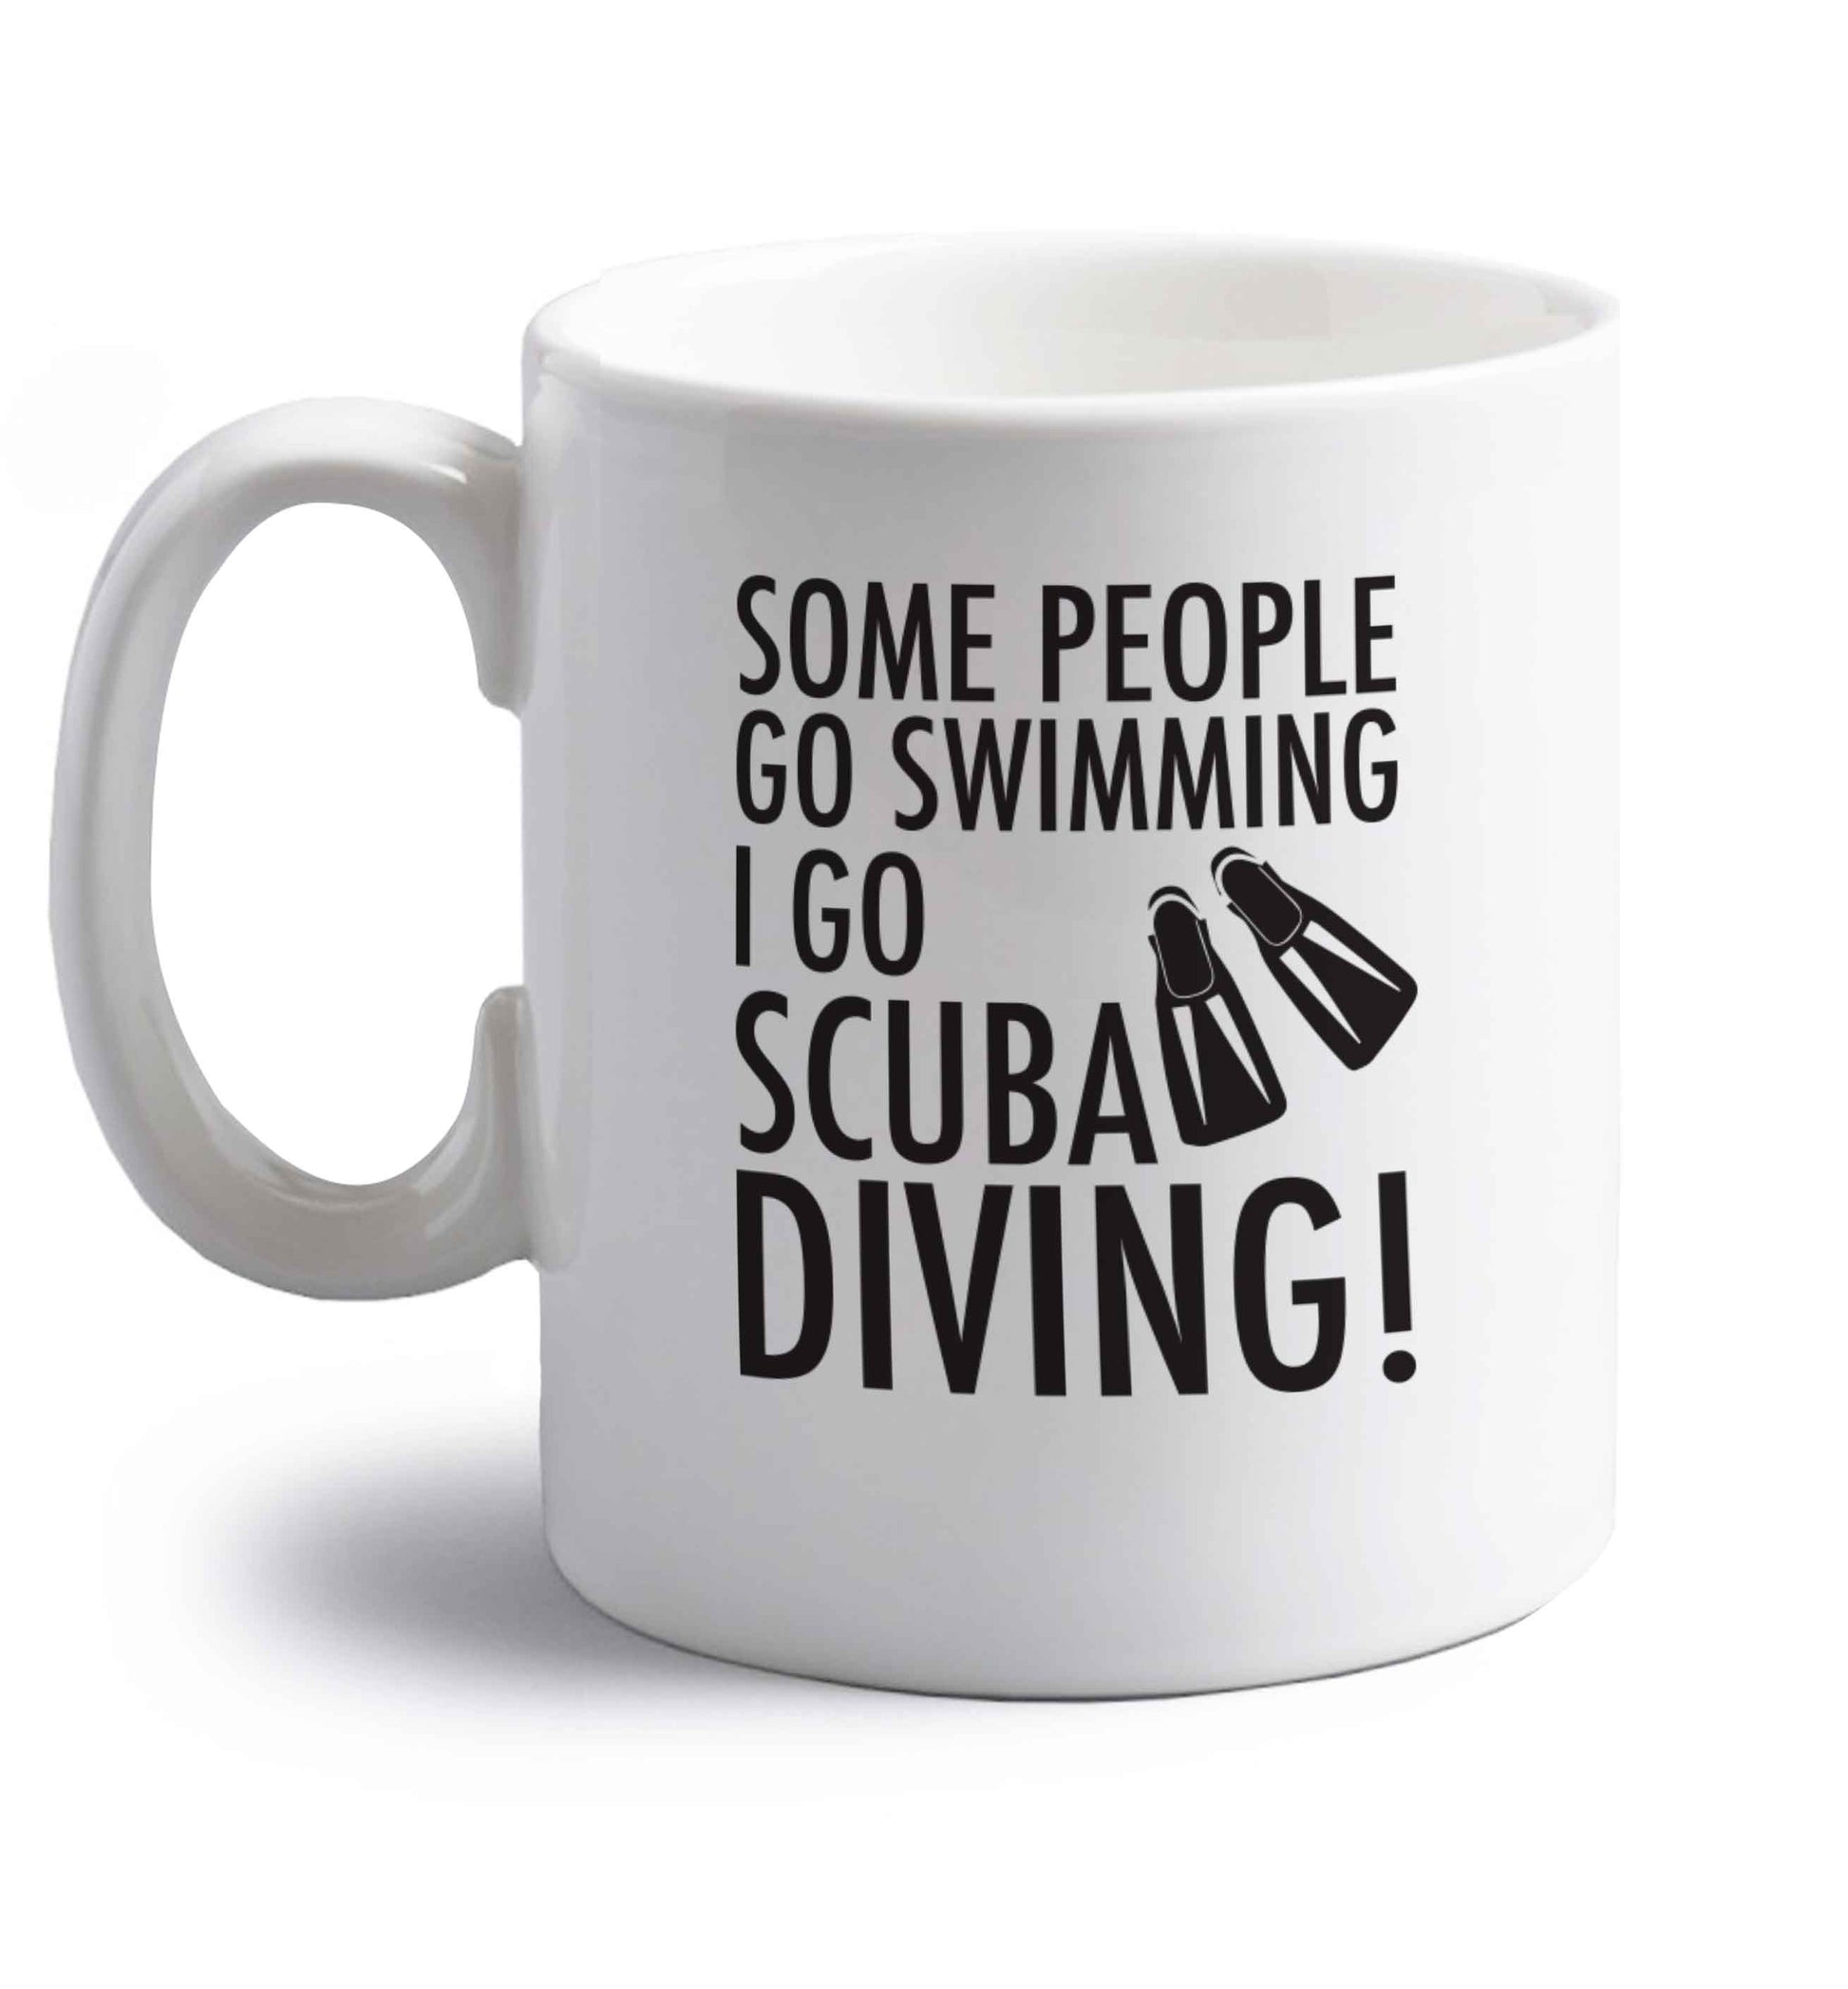 Some people go swimming I go scuba diving! right handed white ceramic mug 